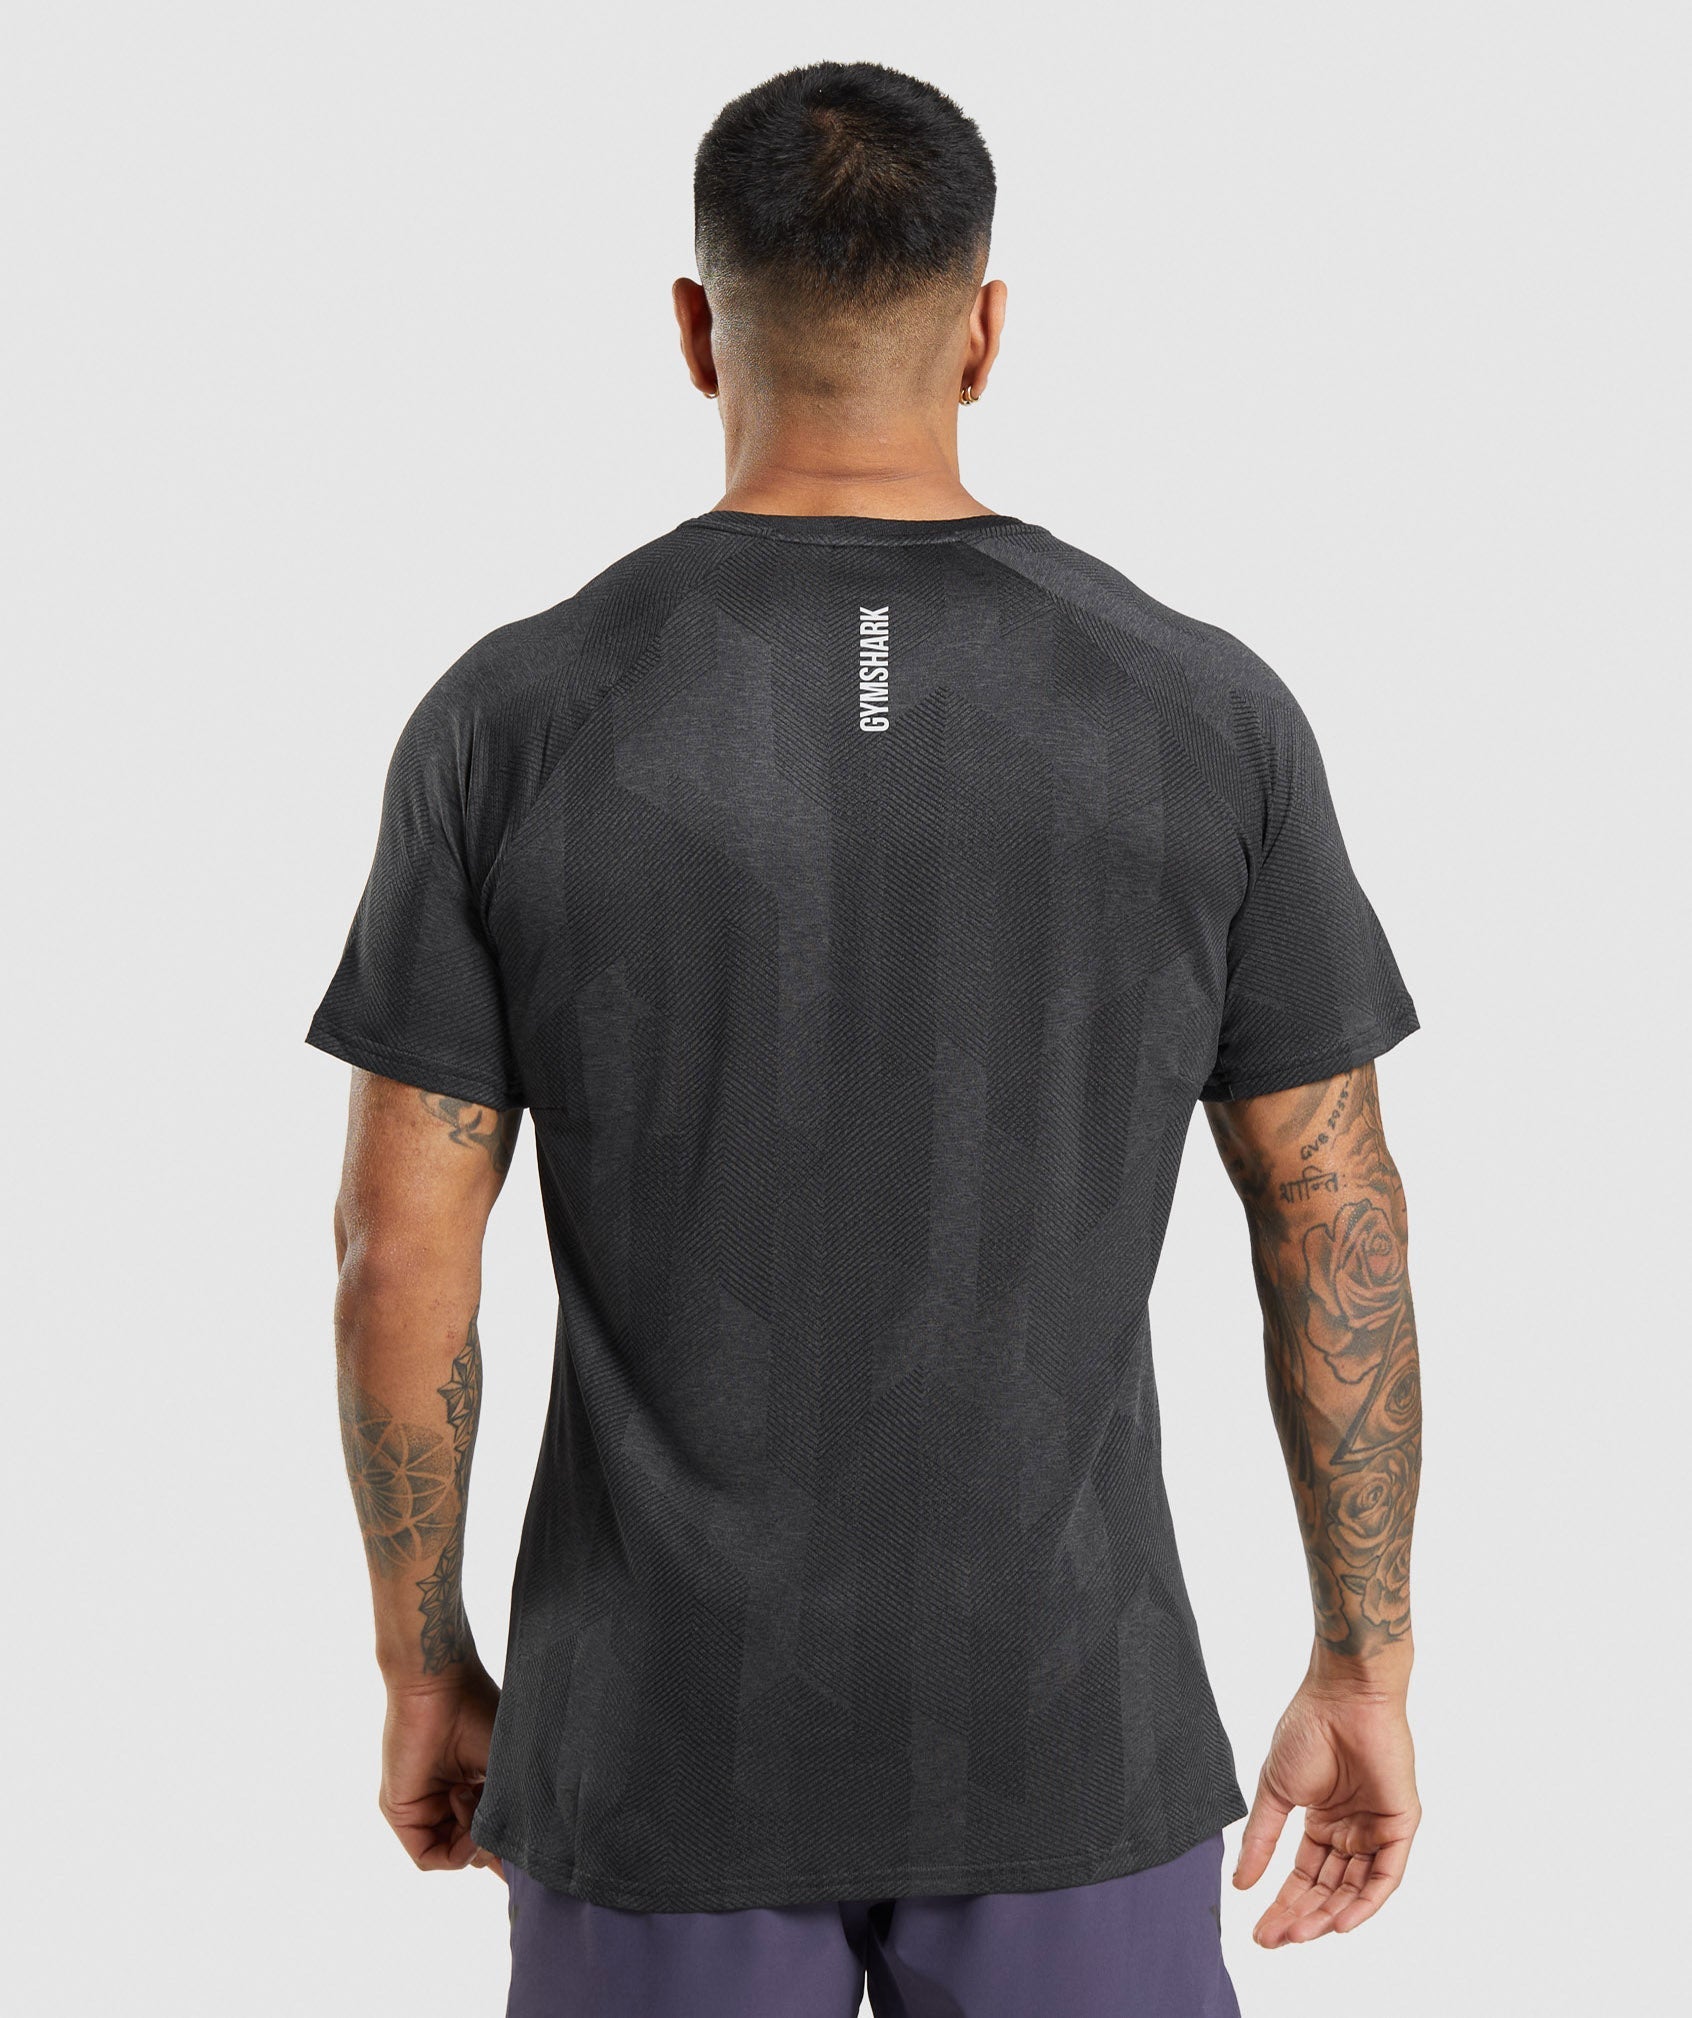 Gymshark Onyx 2.0 T-Shirt - Black